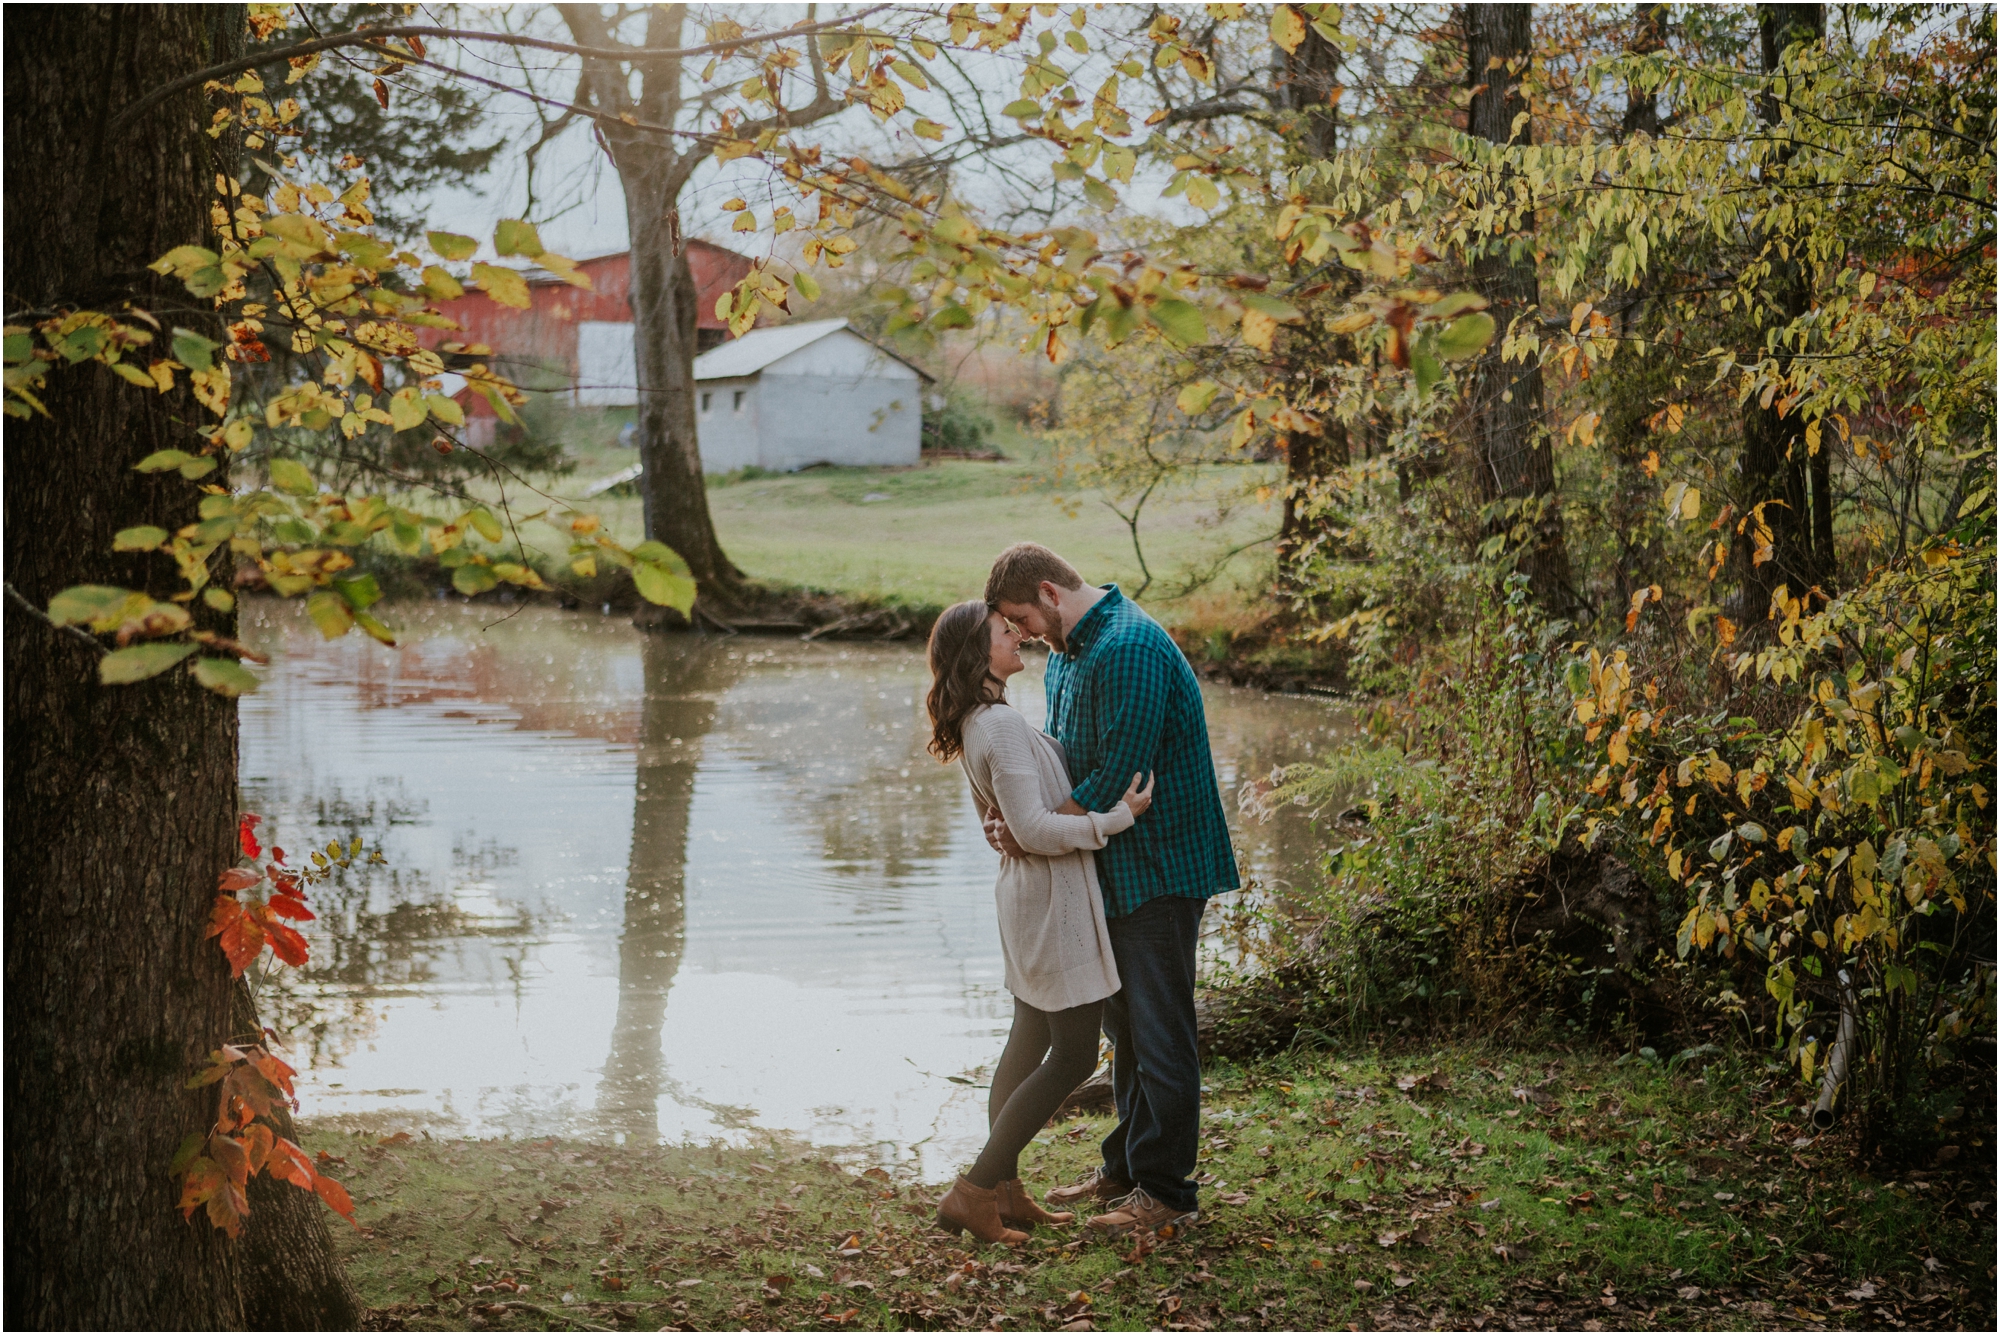 katy-sergent-millstone-limestone-tn-rustic-fall-engagement-session-adventurous-outdoors-intimate-elopement-wedding-northeast-johnson-city-photographer_0009.jpg